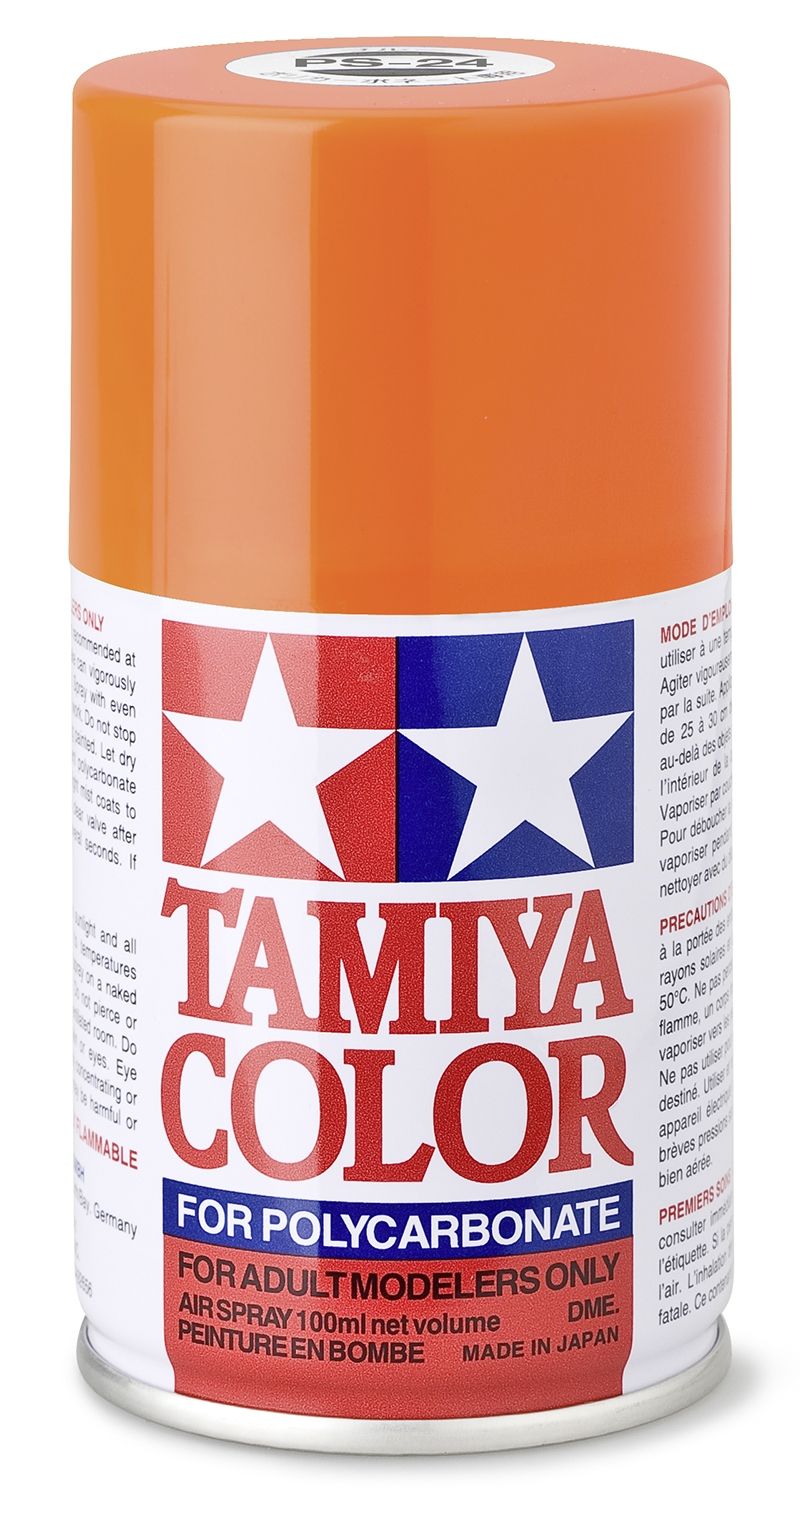 Tamiya PS-24 LEUCHT-ORANGE Sprühfarbe 100ml für Polycarbonat ( Lexanfarbe )